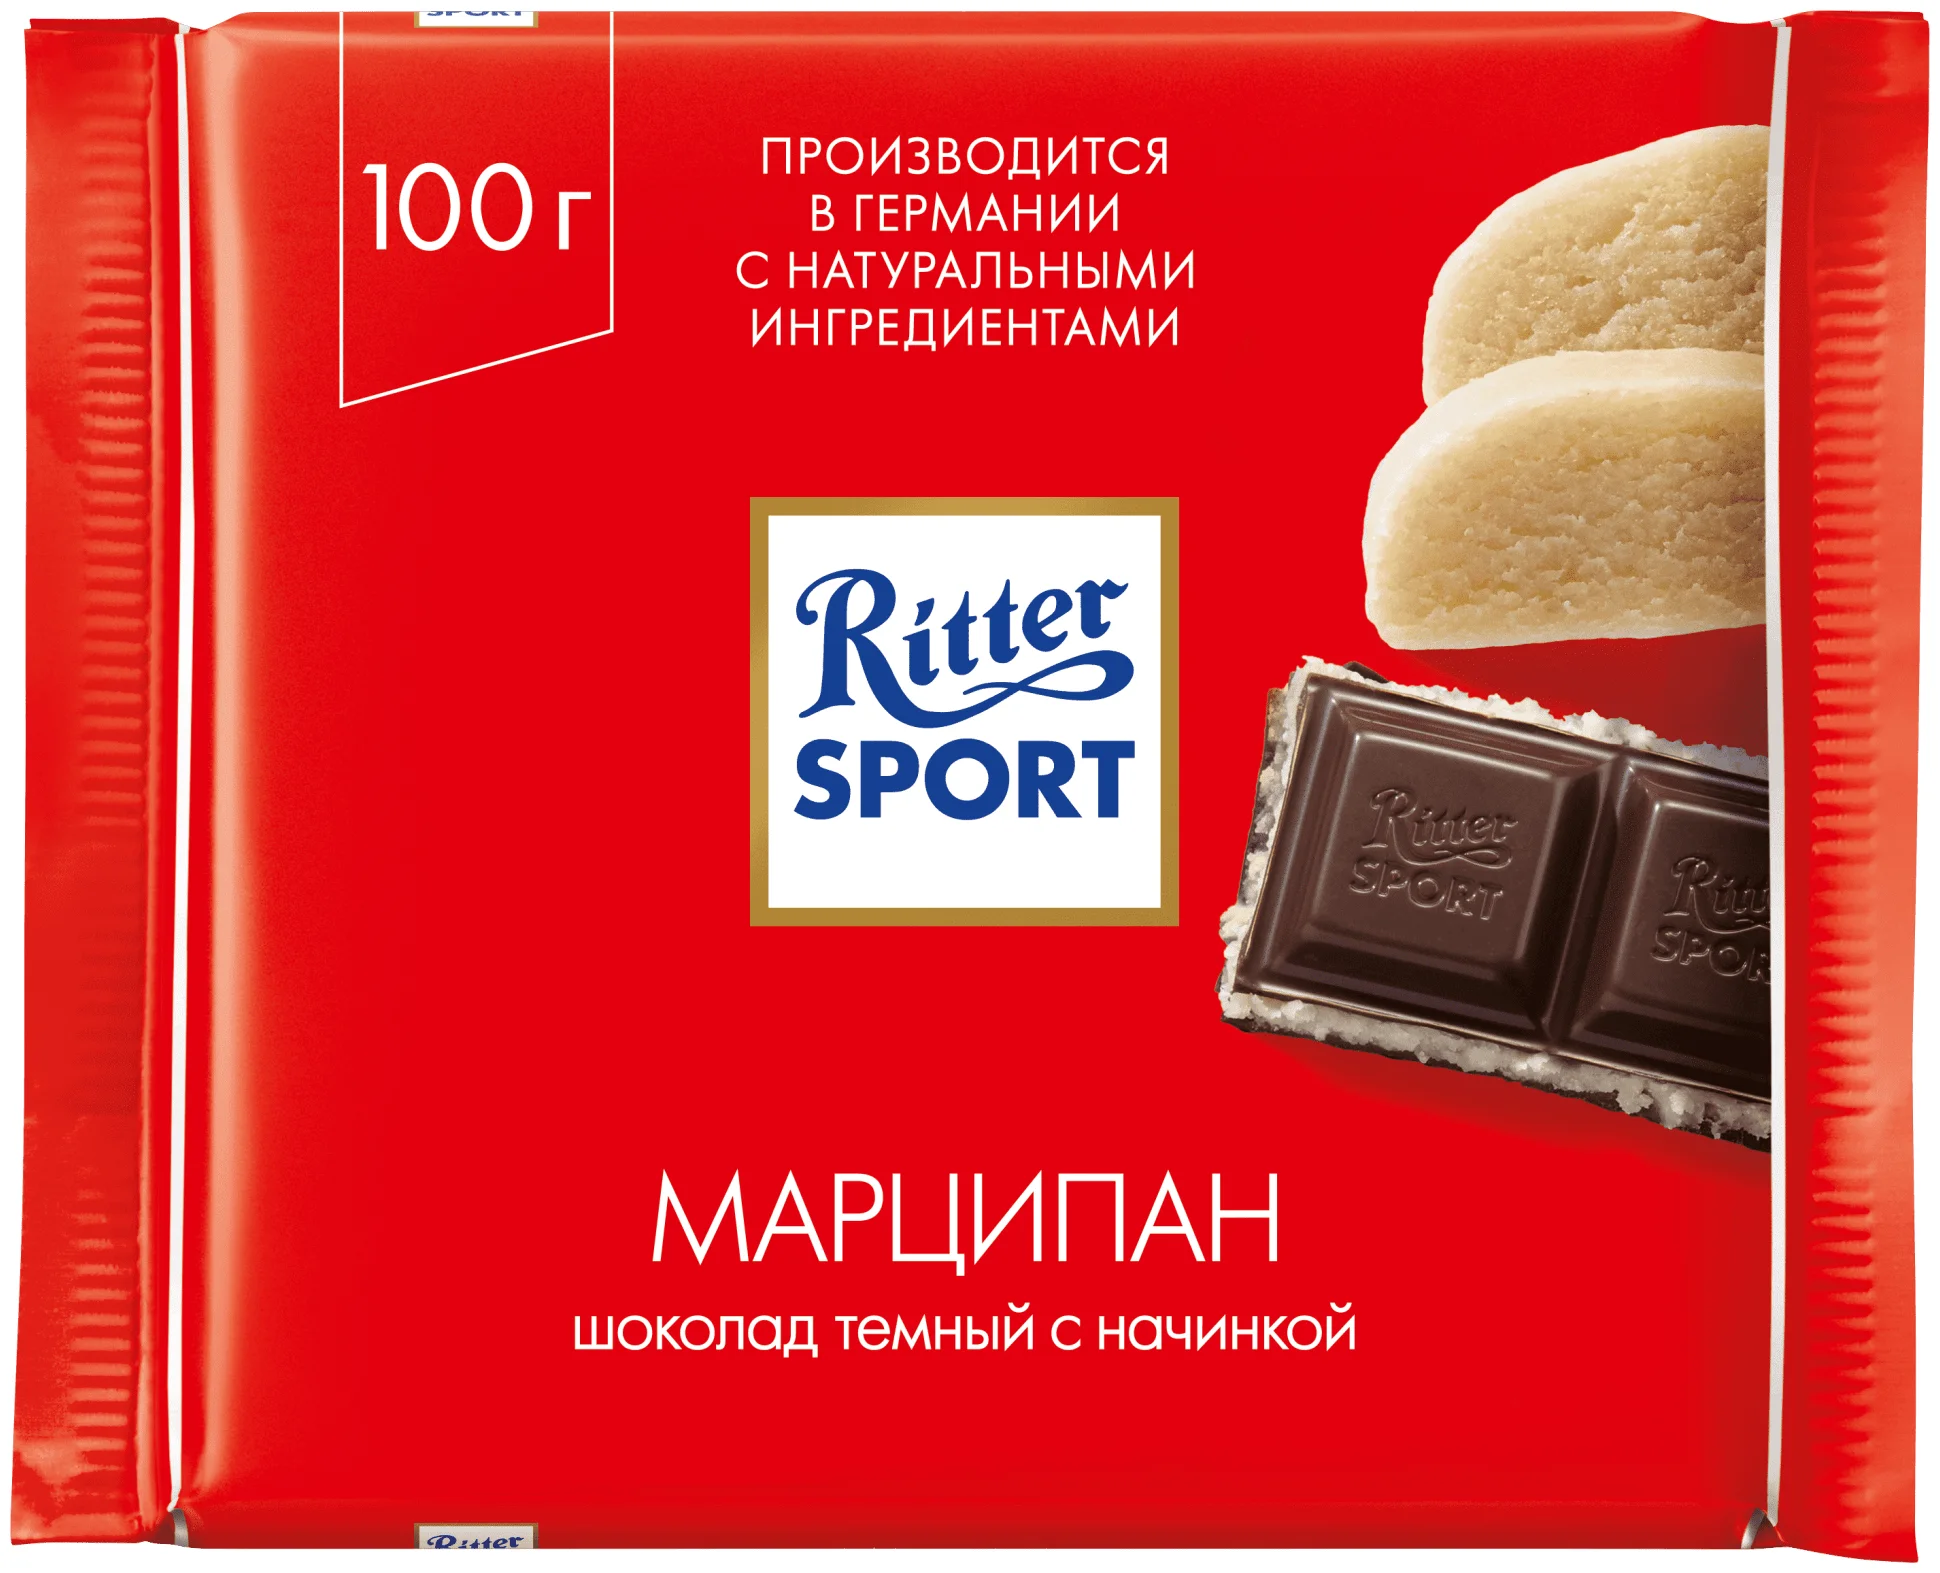 Ritter Sport "Марципан" - вид шоколада: темный